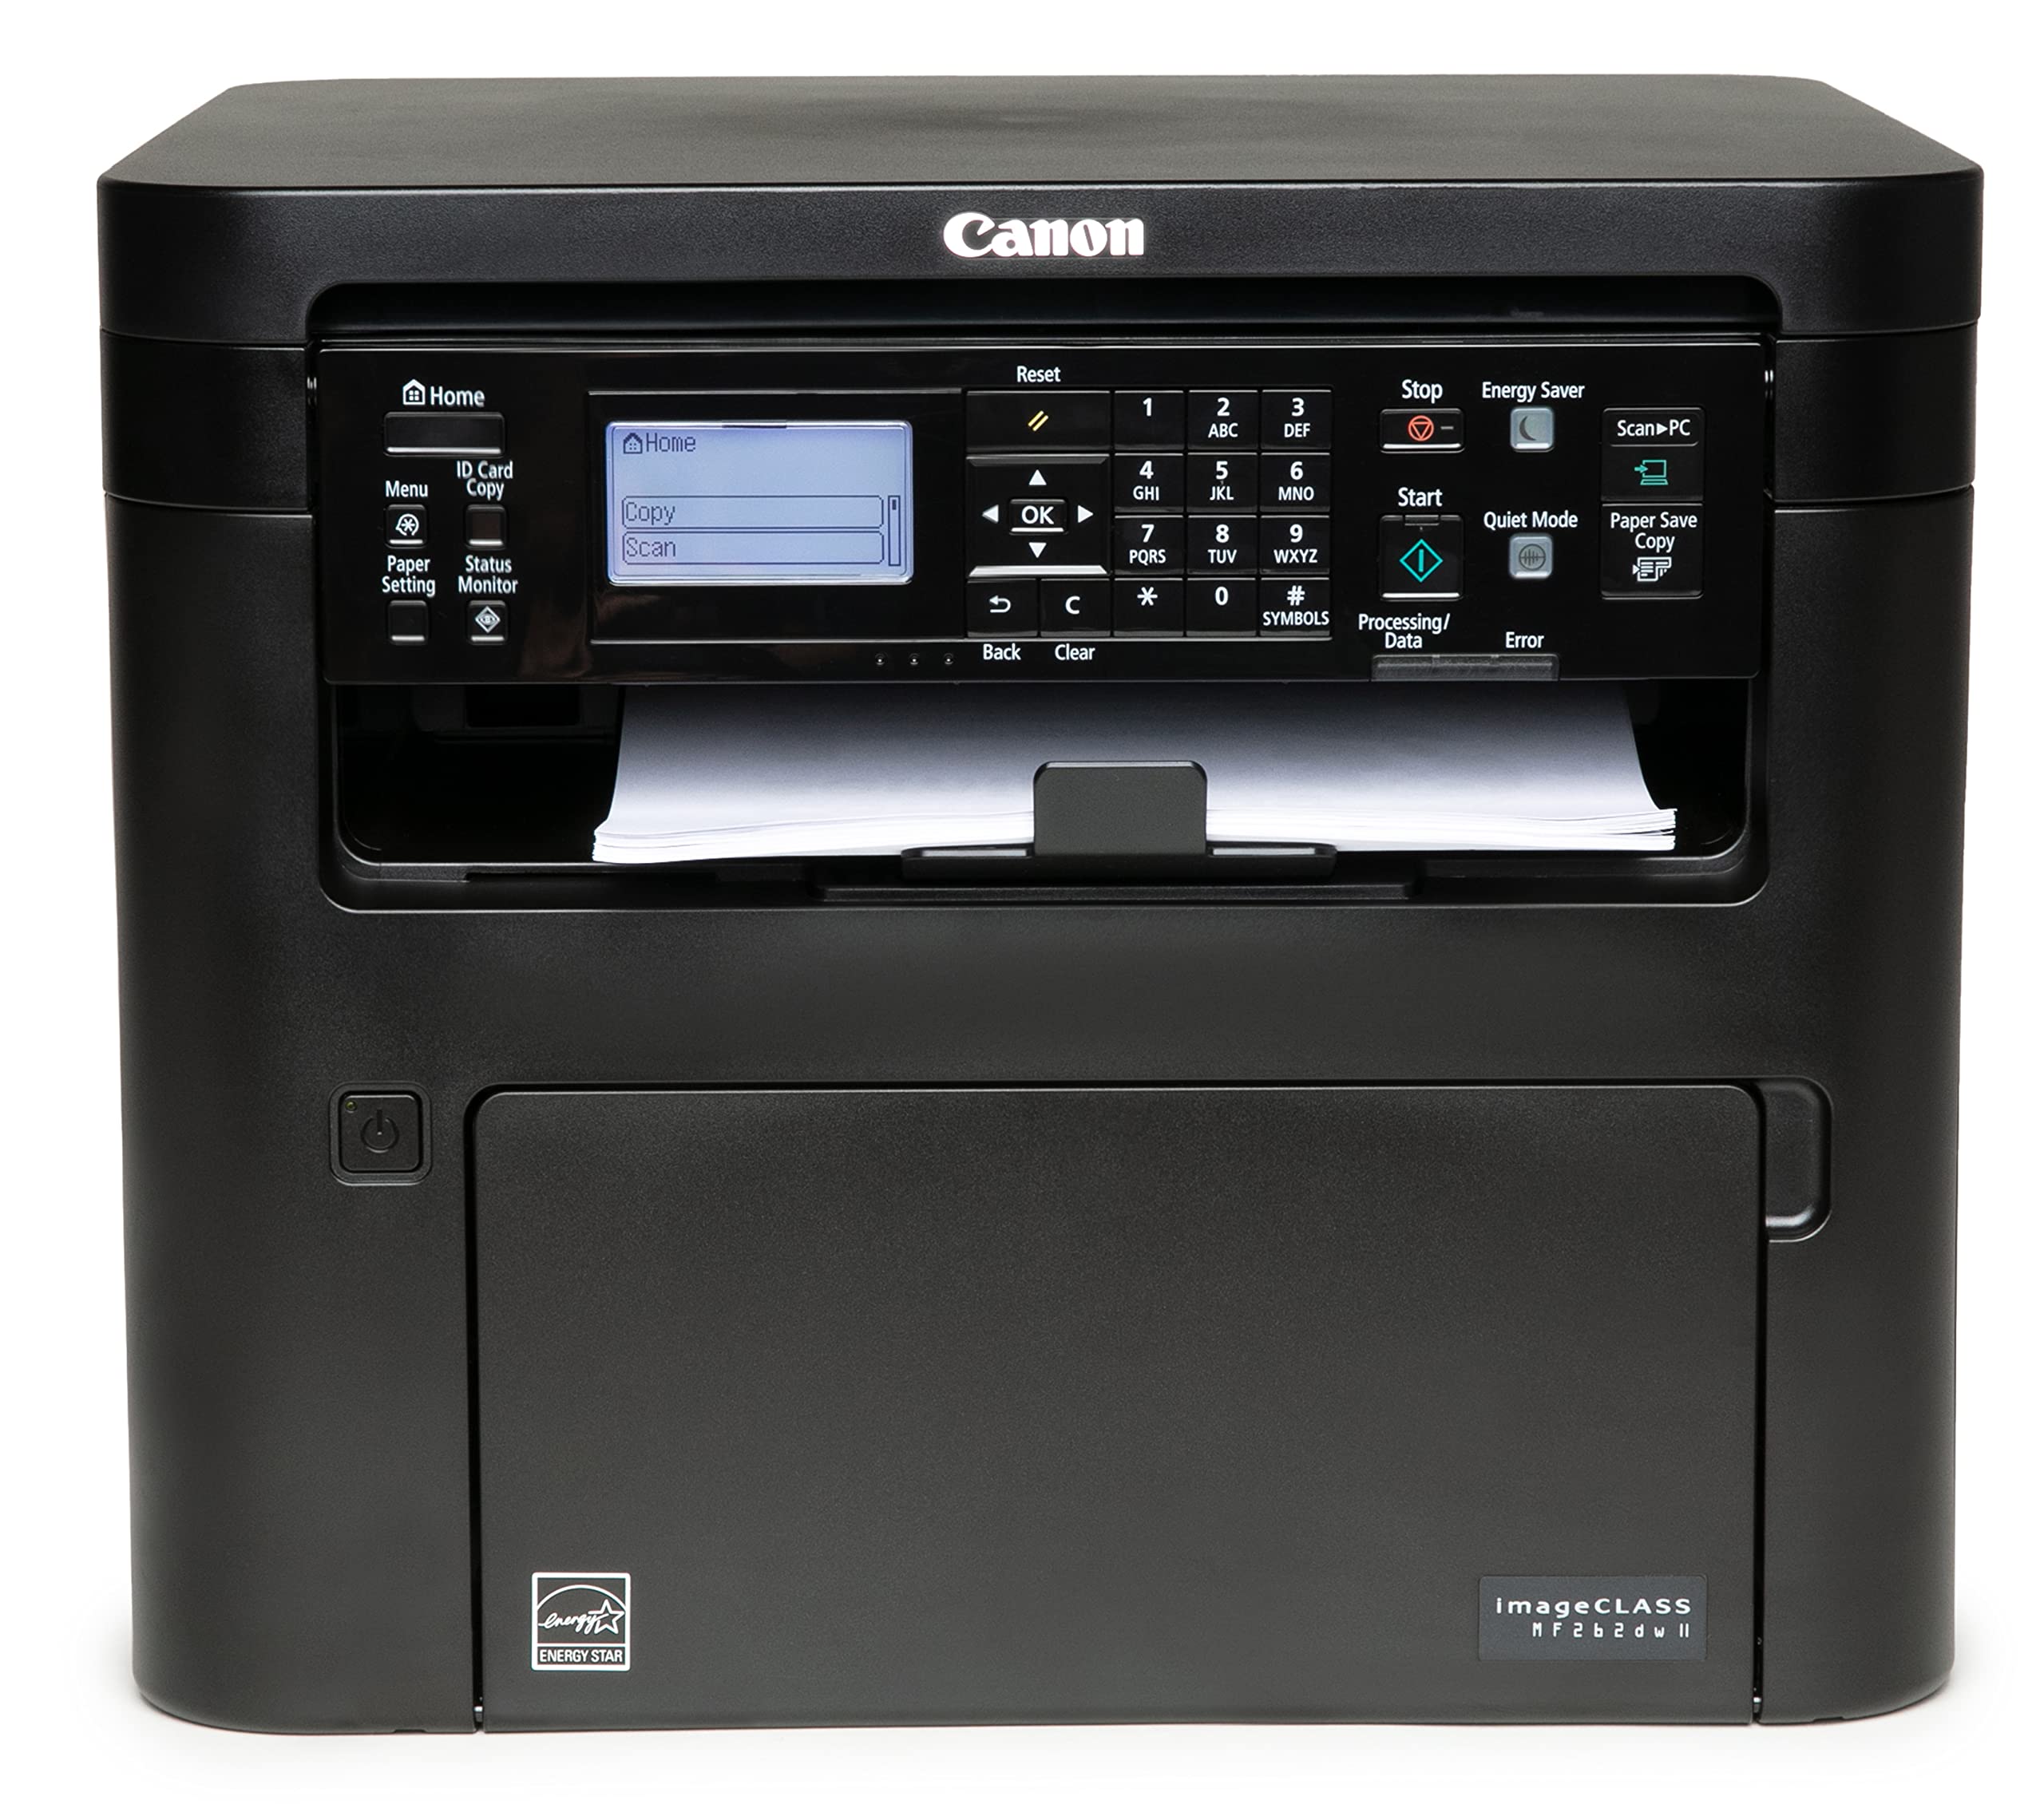 Canon imageCLASS MF262dw II Wireless Monochrome Laser Printer $139.99